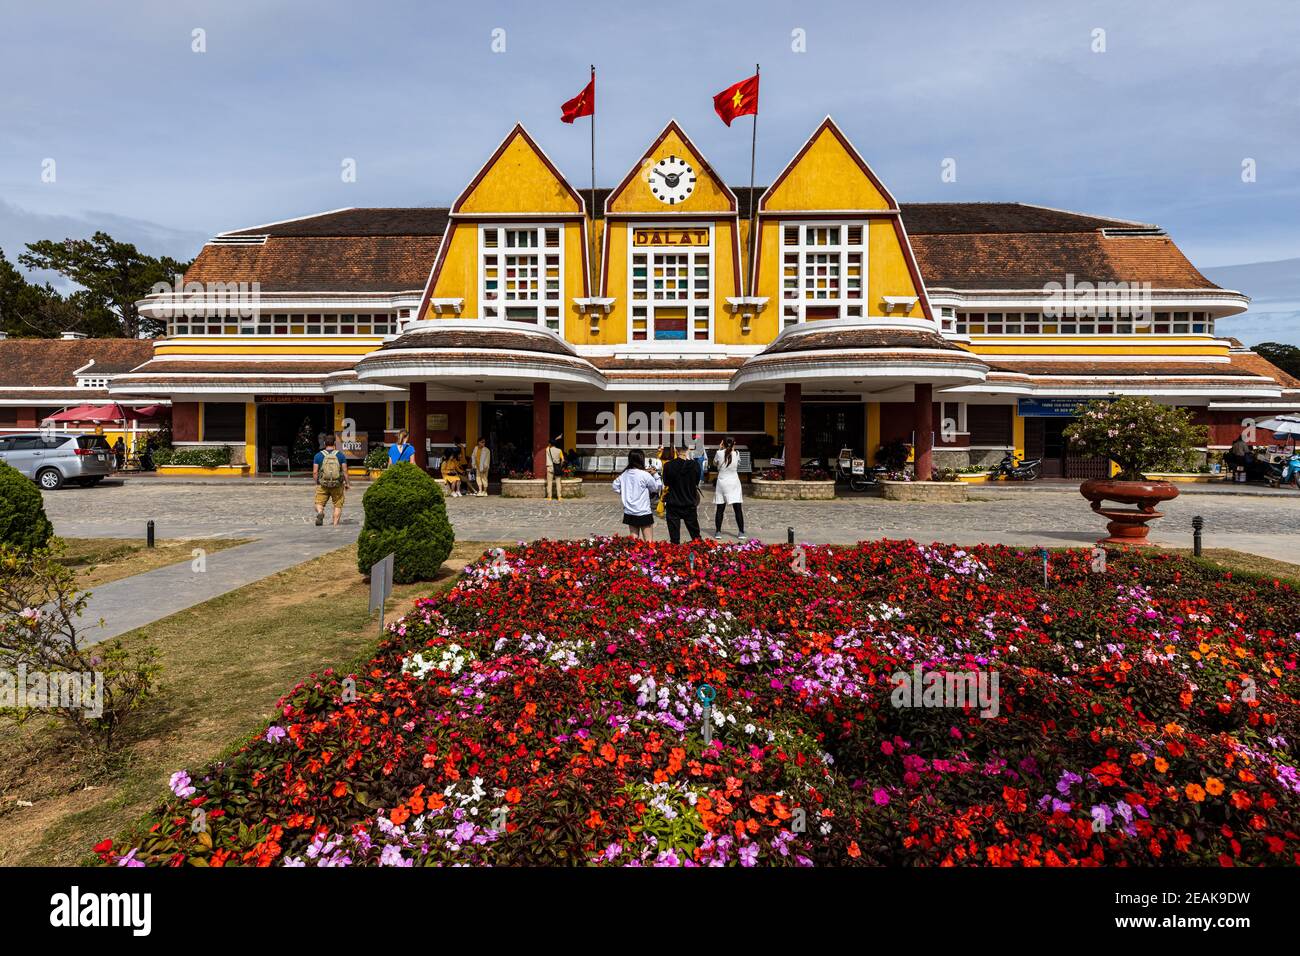 The historic train station of Dalat in Vietnam Stock Photo